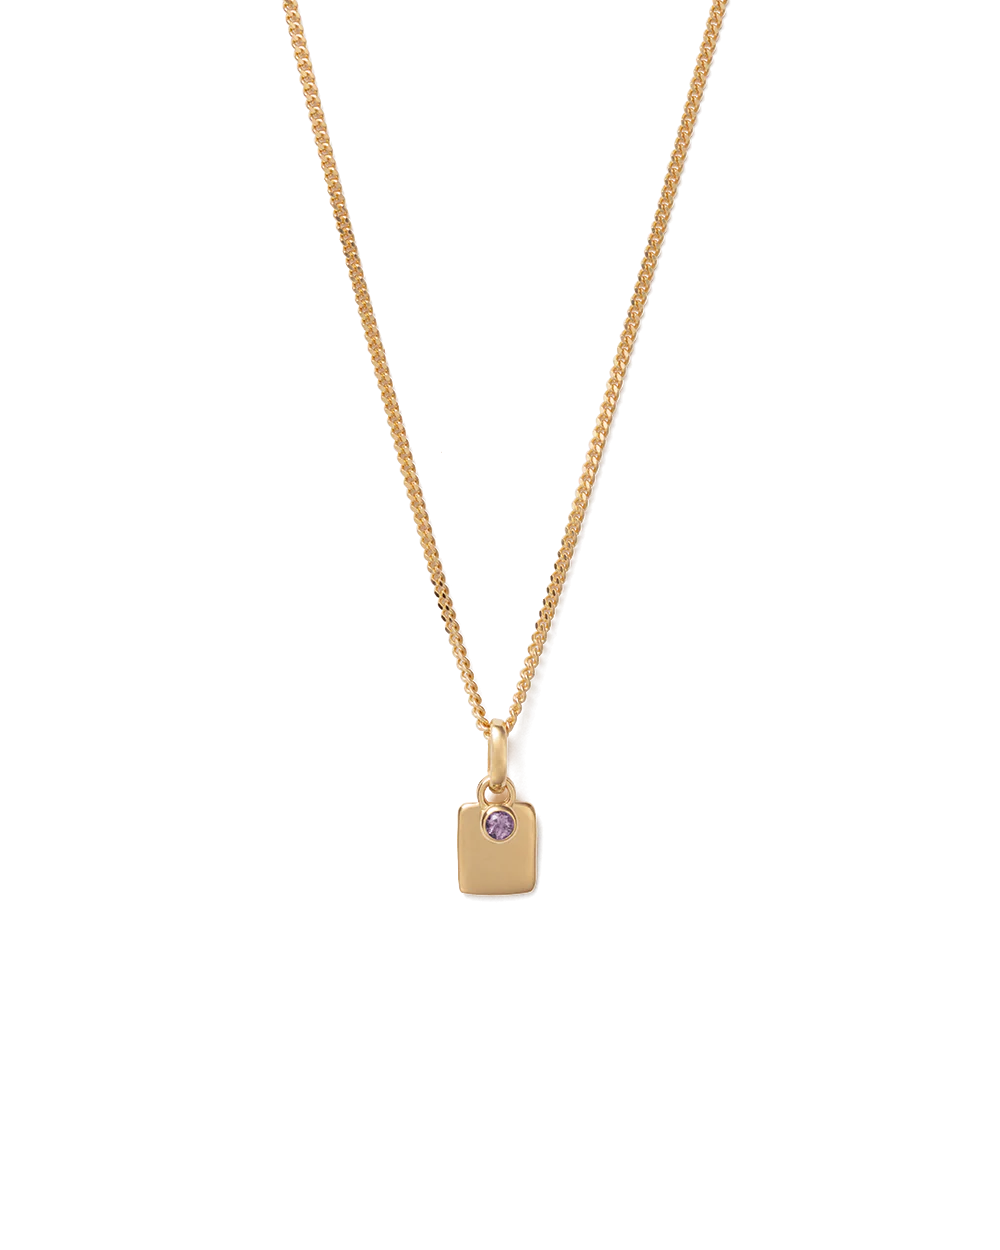 February Birthstone Necklace 18K GOLD VERMEIL/ AMETHYST